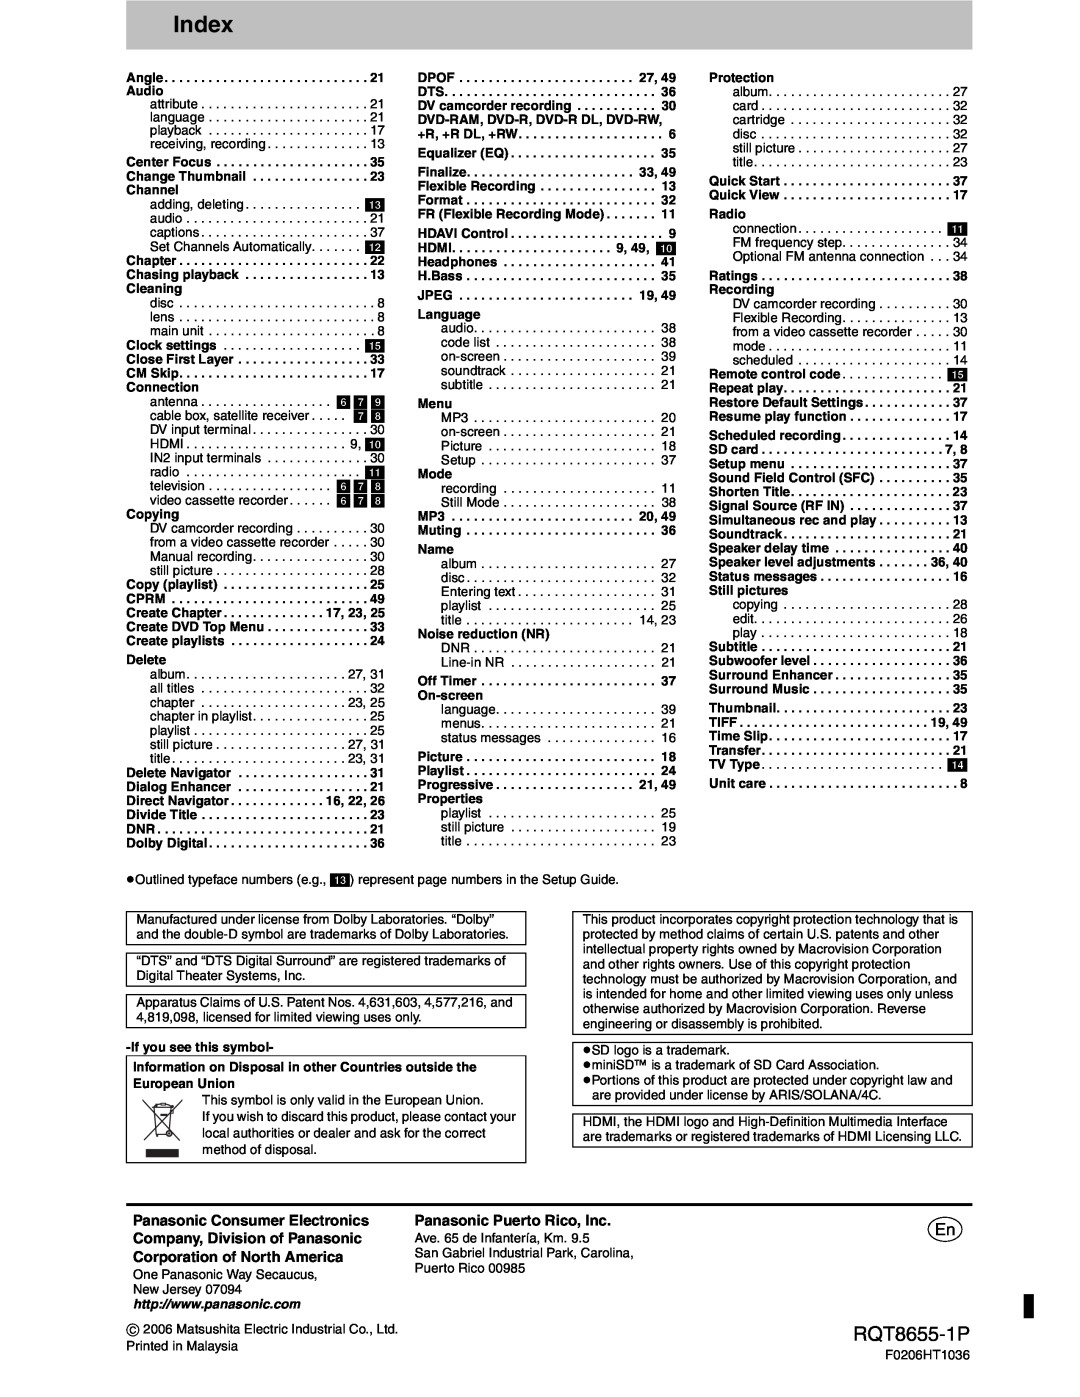 Panasonic SC-RT50 Index, Panasonic Consumer Electronics, Panasonic Puerto Rico, Inc, Company, Division of Panasonic 